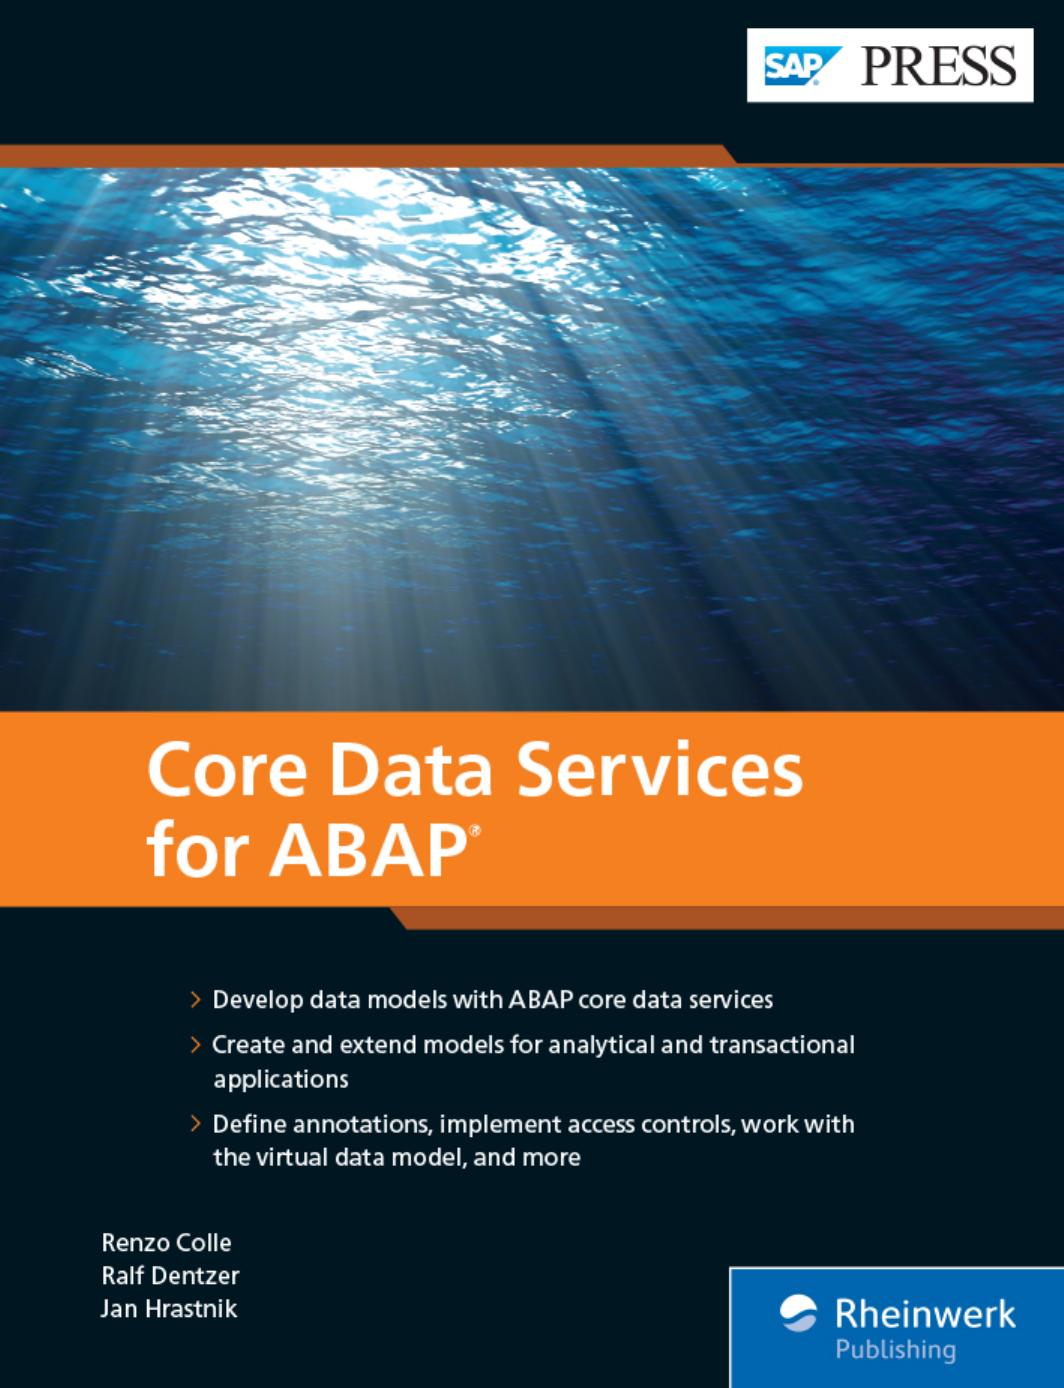 ABAP CDS Core Data Services for ABAP (SAP PRESS) - Renzo Colle & Ralf Dentzer & Jan Hrastnik.jpg